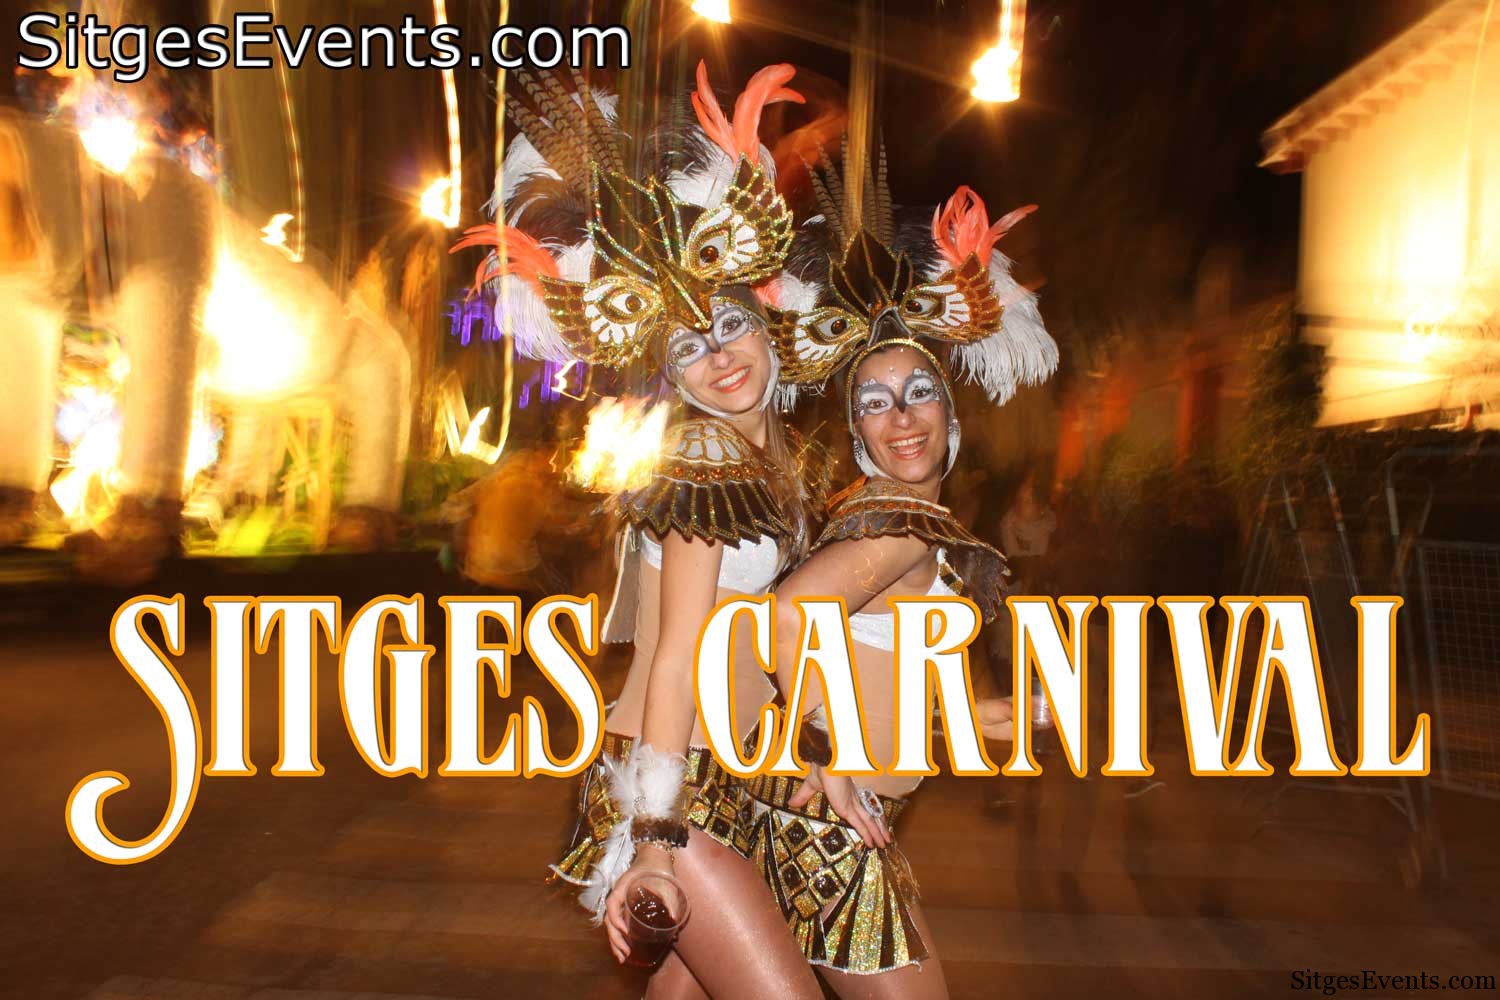 Sitges Carnival